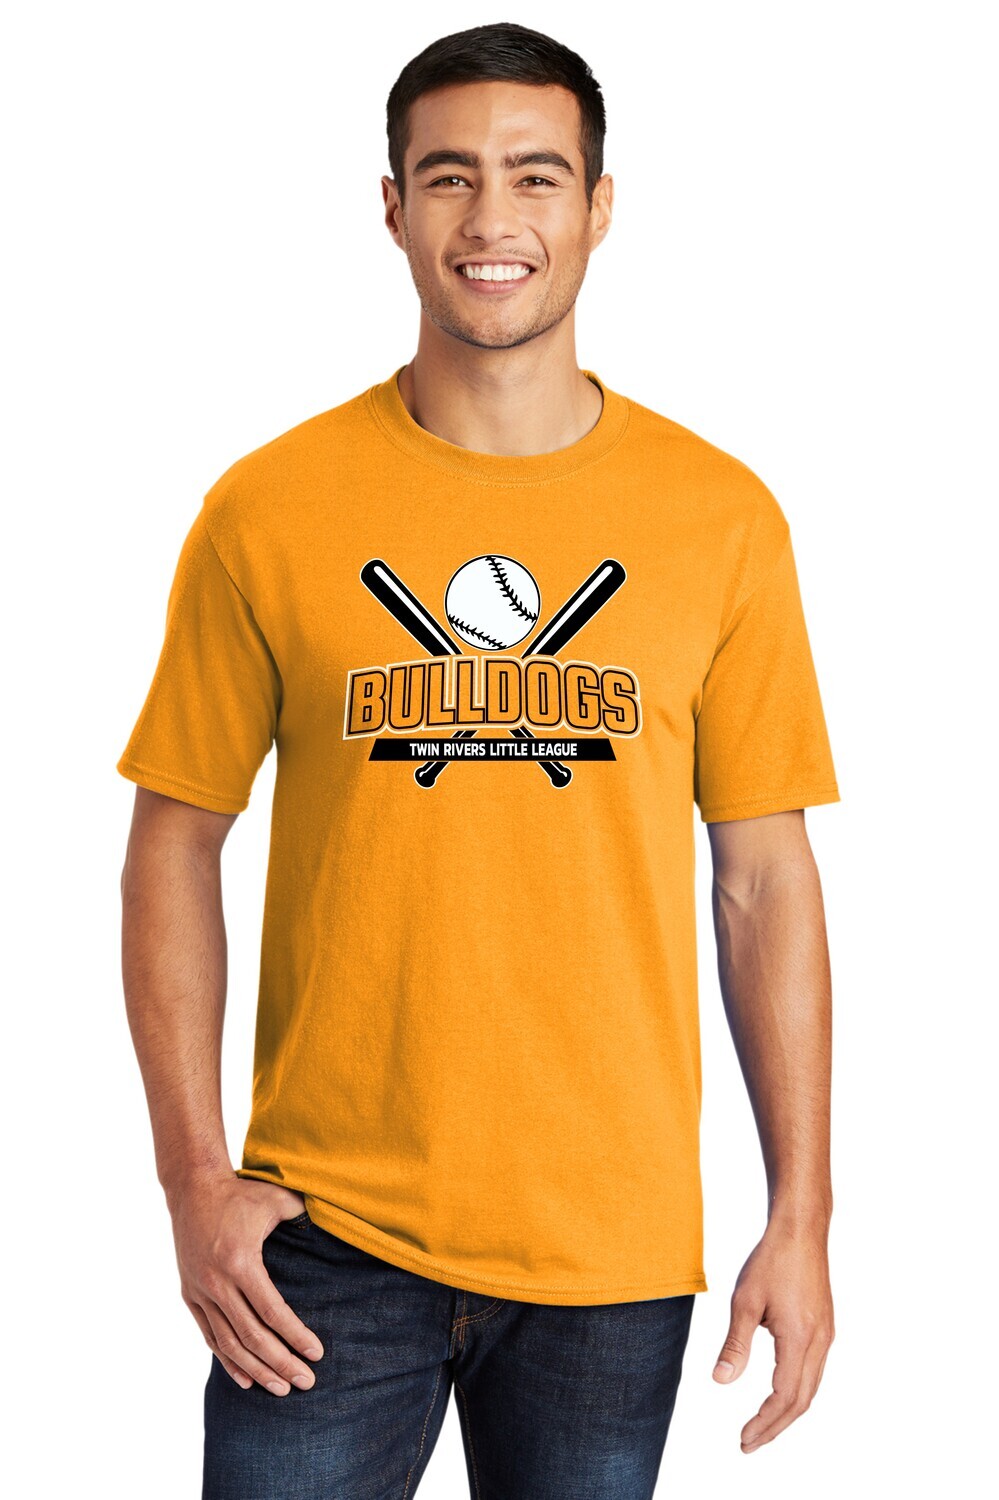 Bulldogs T-Shirt